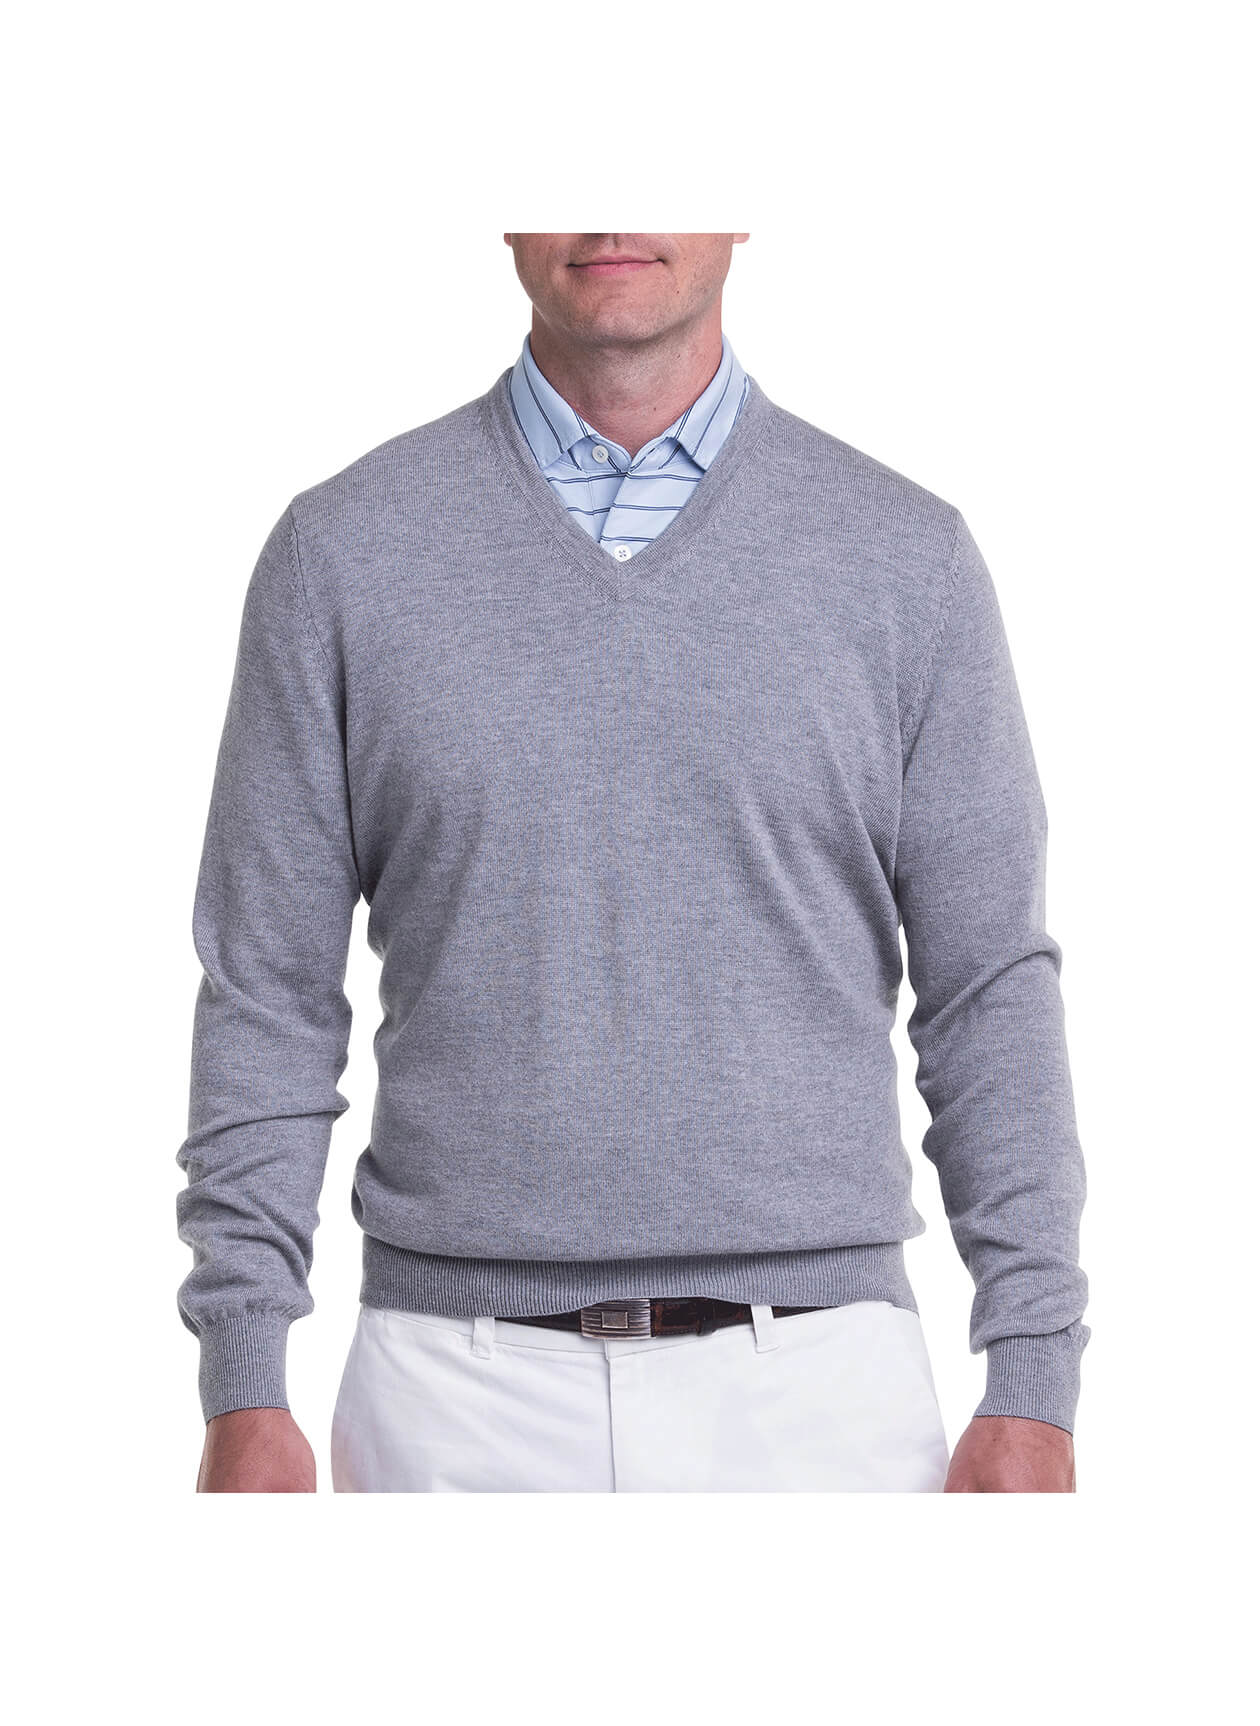 Fairway & Greene A11140 - Men's Baruffa V-Neck Sweater